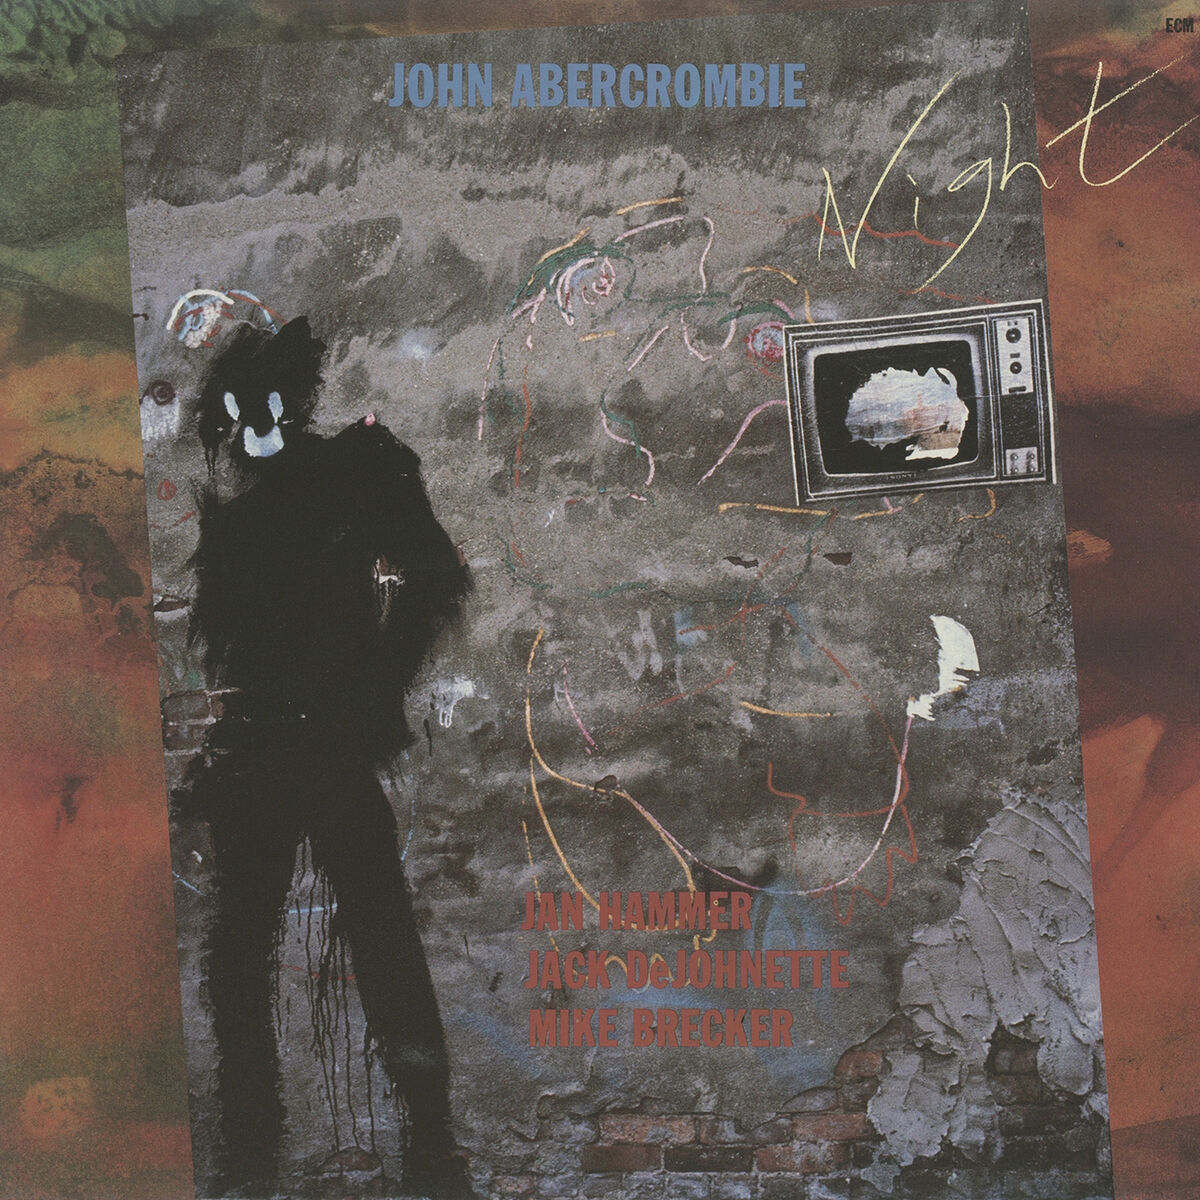 John Abercrombie: albums